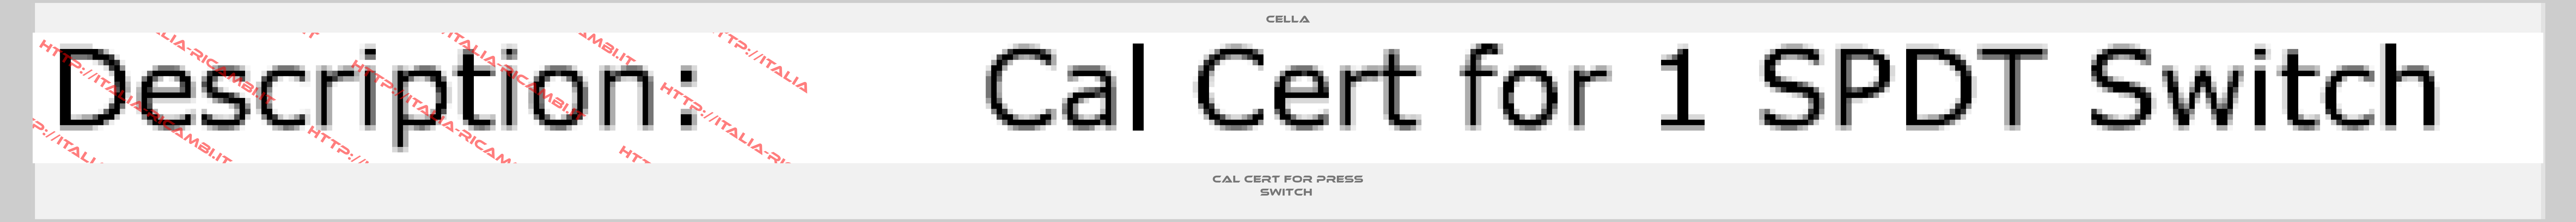 Cella-Cal Cert for Press Switch 